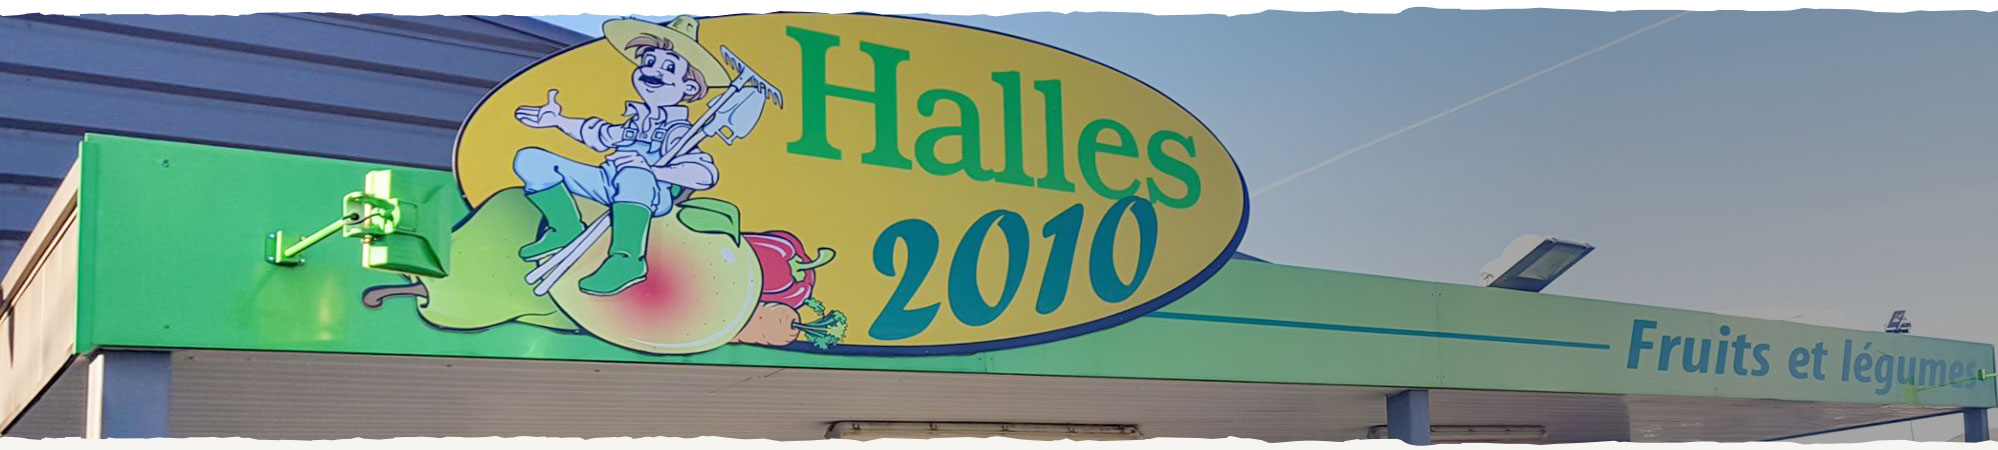 Halles 2010